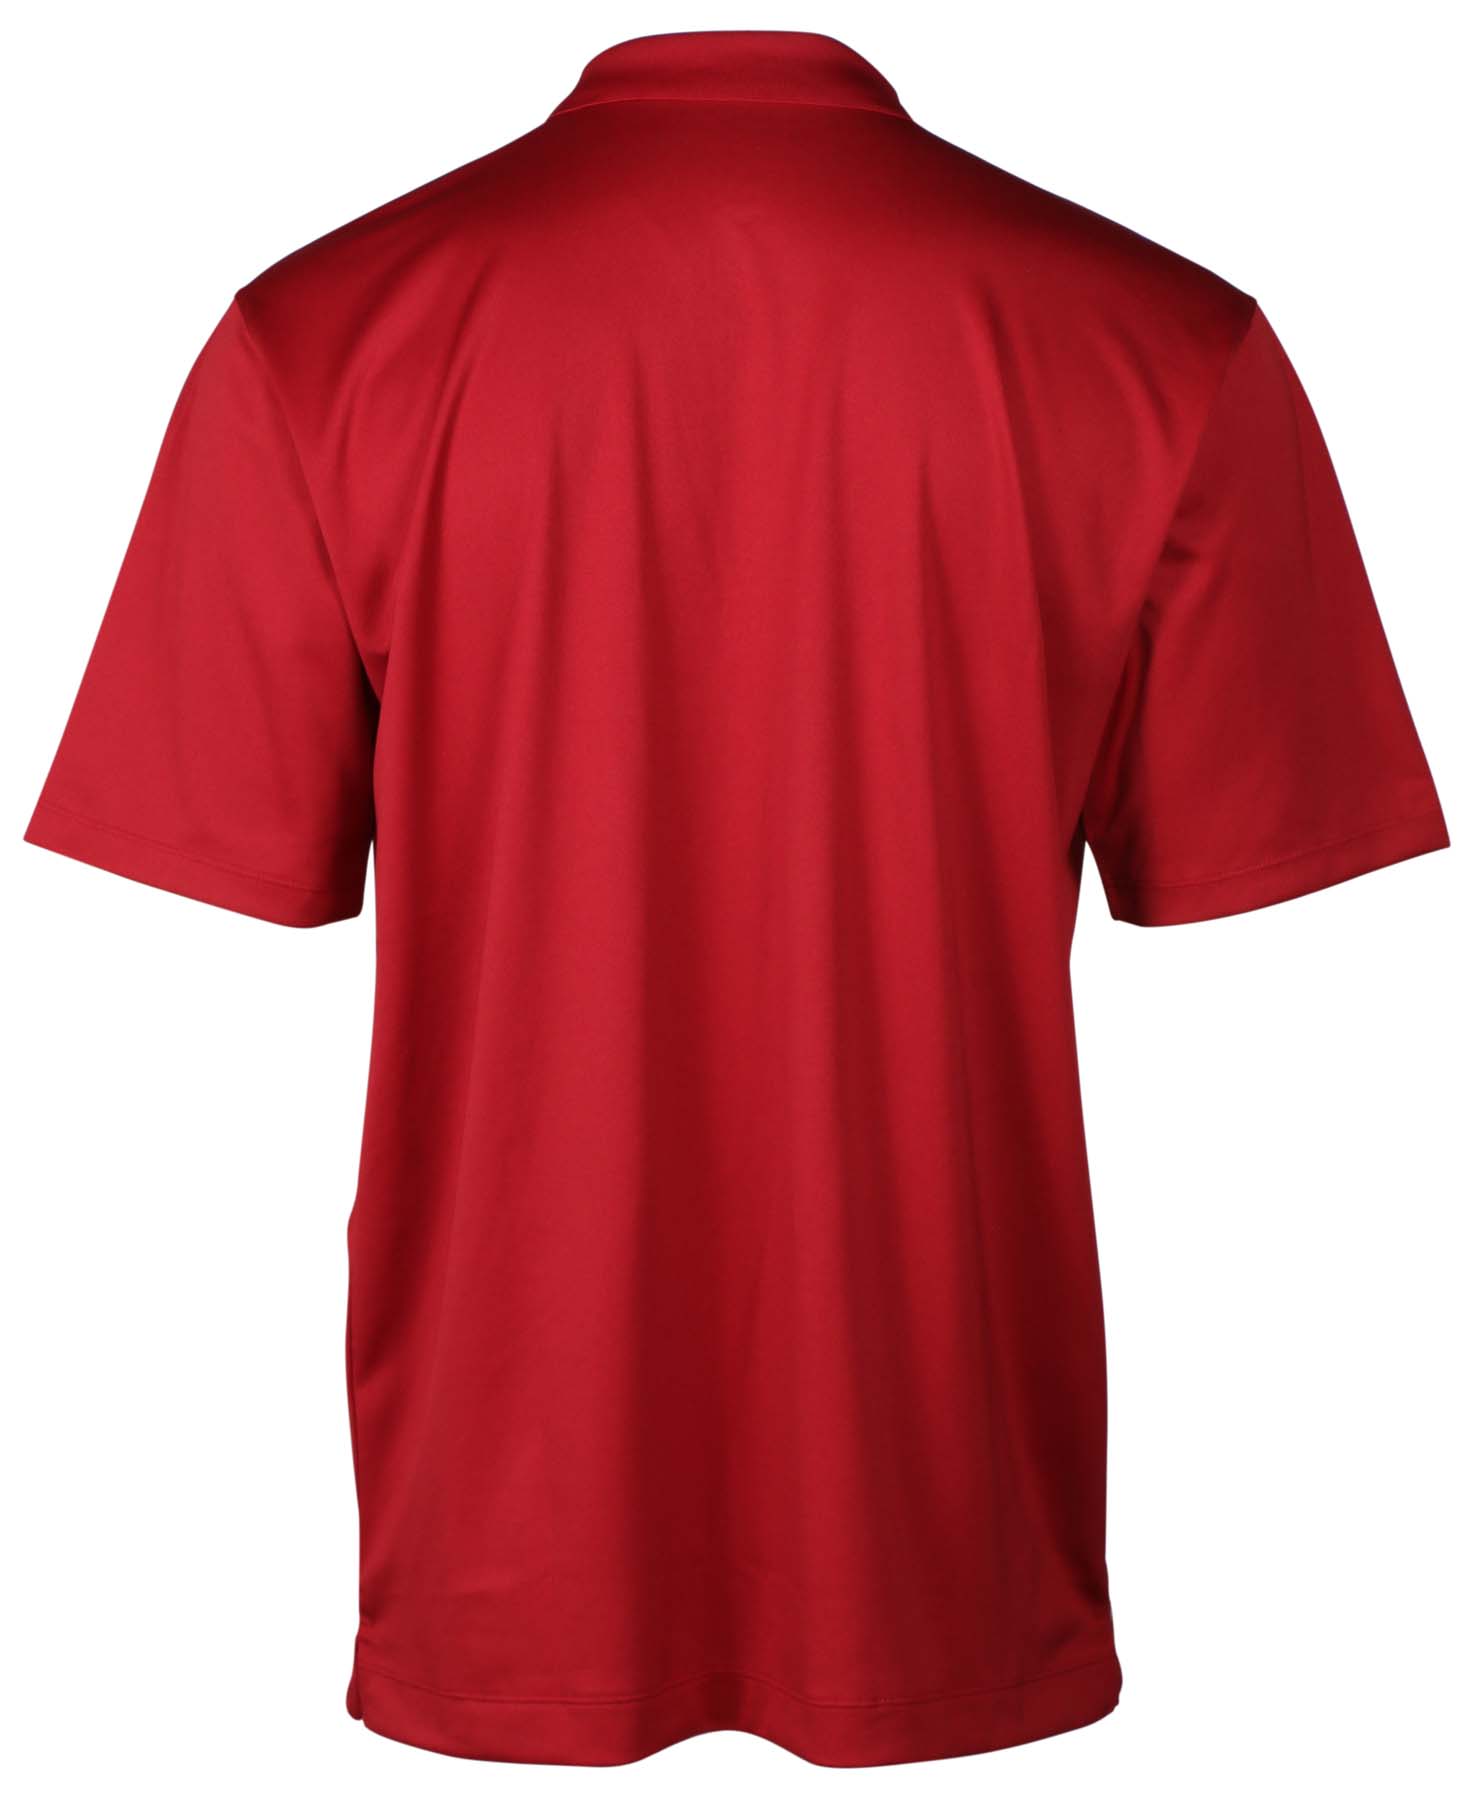 Nike Men's Dri-Fit Football Polo Shirt - image 3 of 3